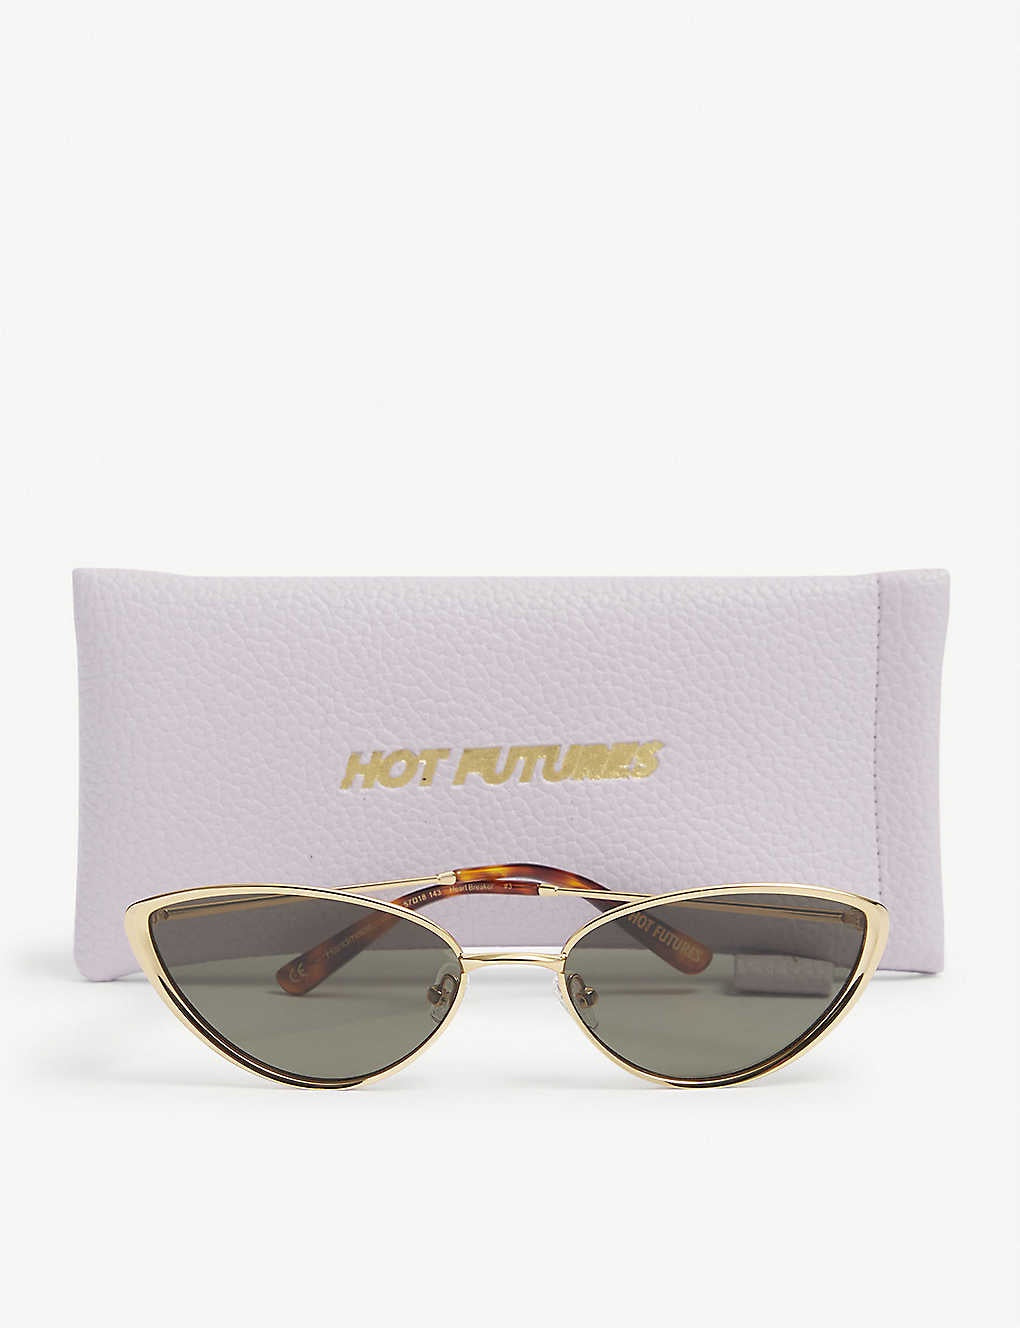 HOT FUTURES Heartbreaker Sunglasses - Green Lens